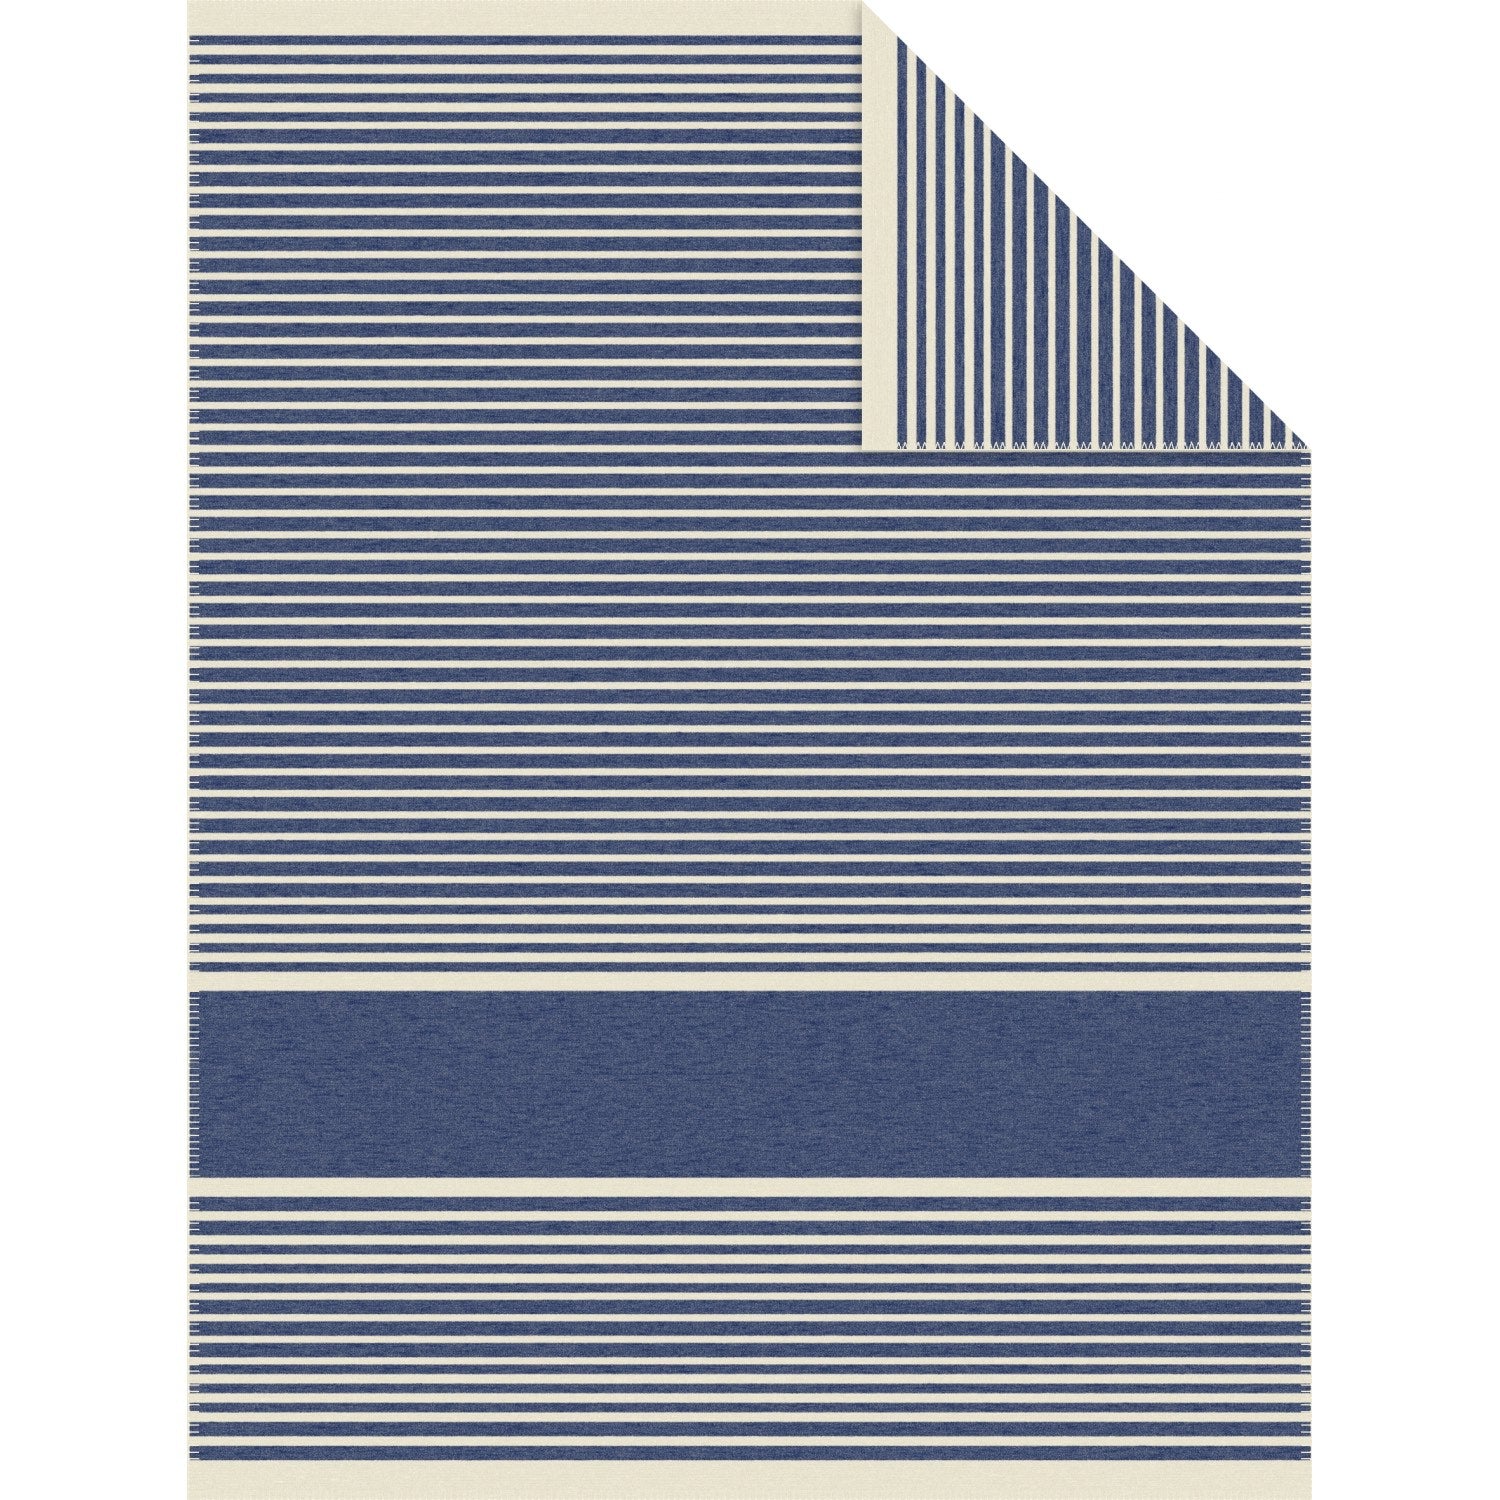 Ibena Ibiza Stripe Luxury Blanket - Navy